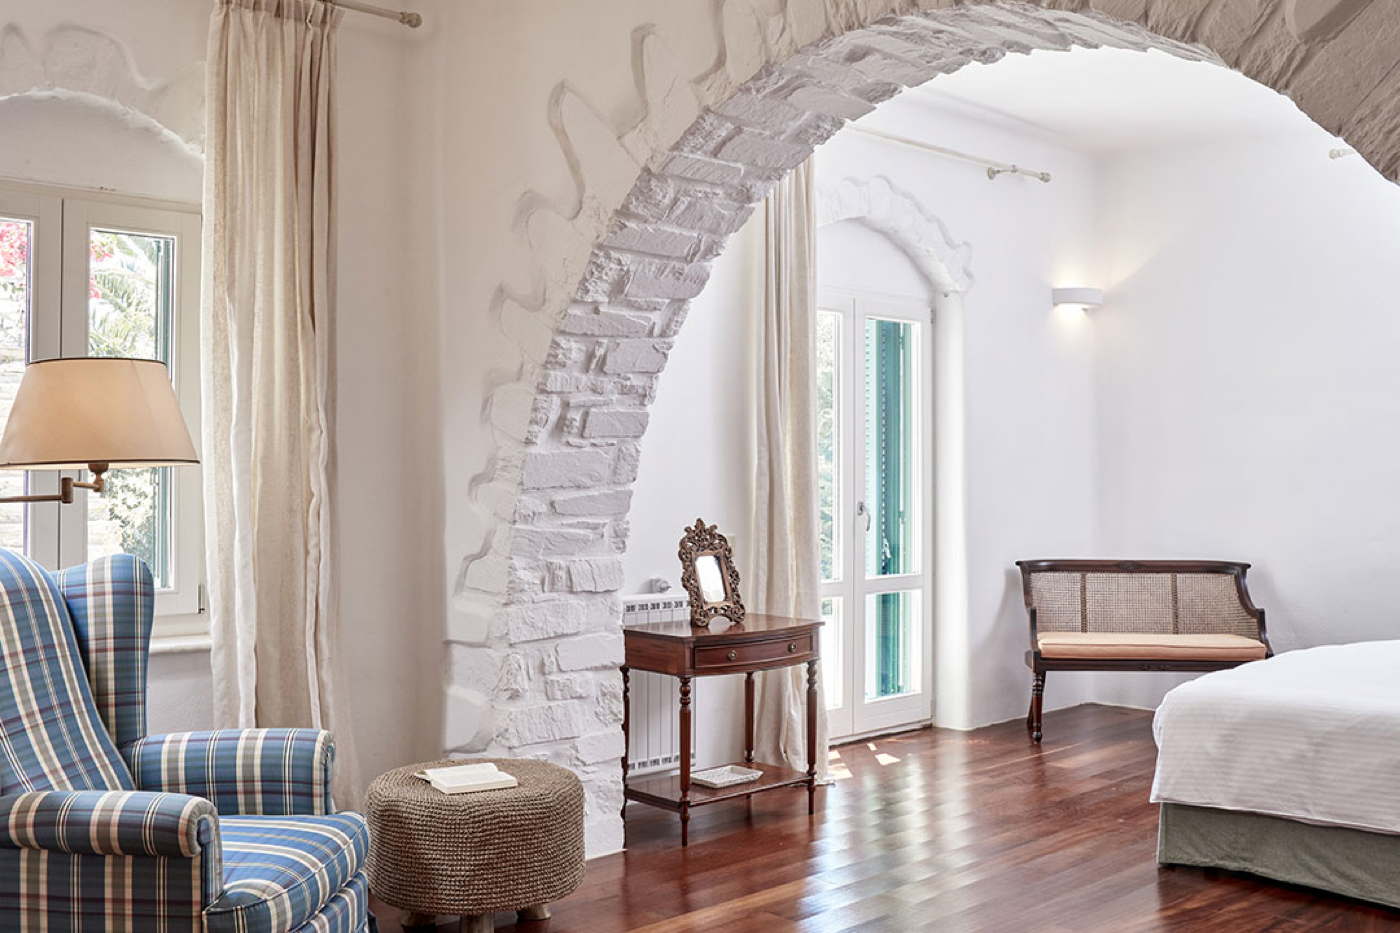 Luxury villa Paros-beach luxury with pool-Cyclades Greece-Parasporos Bay